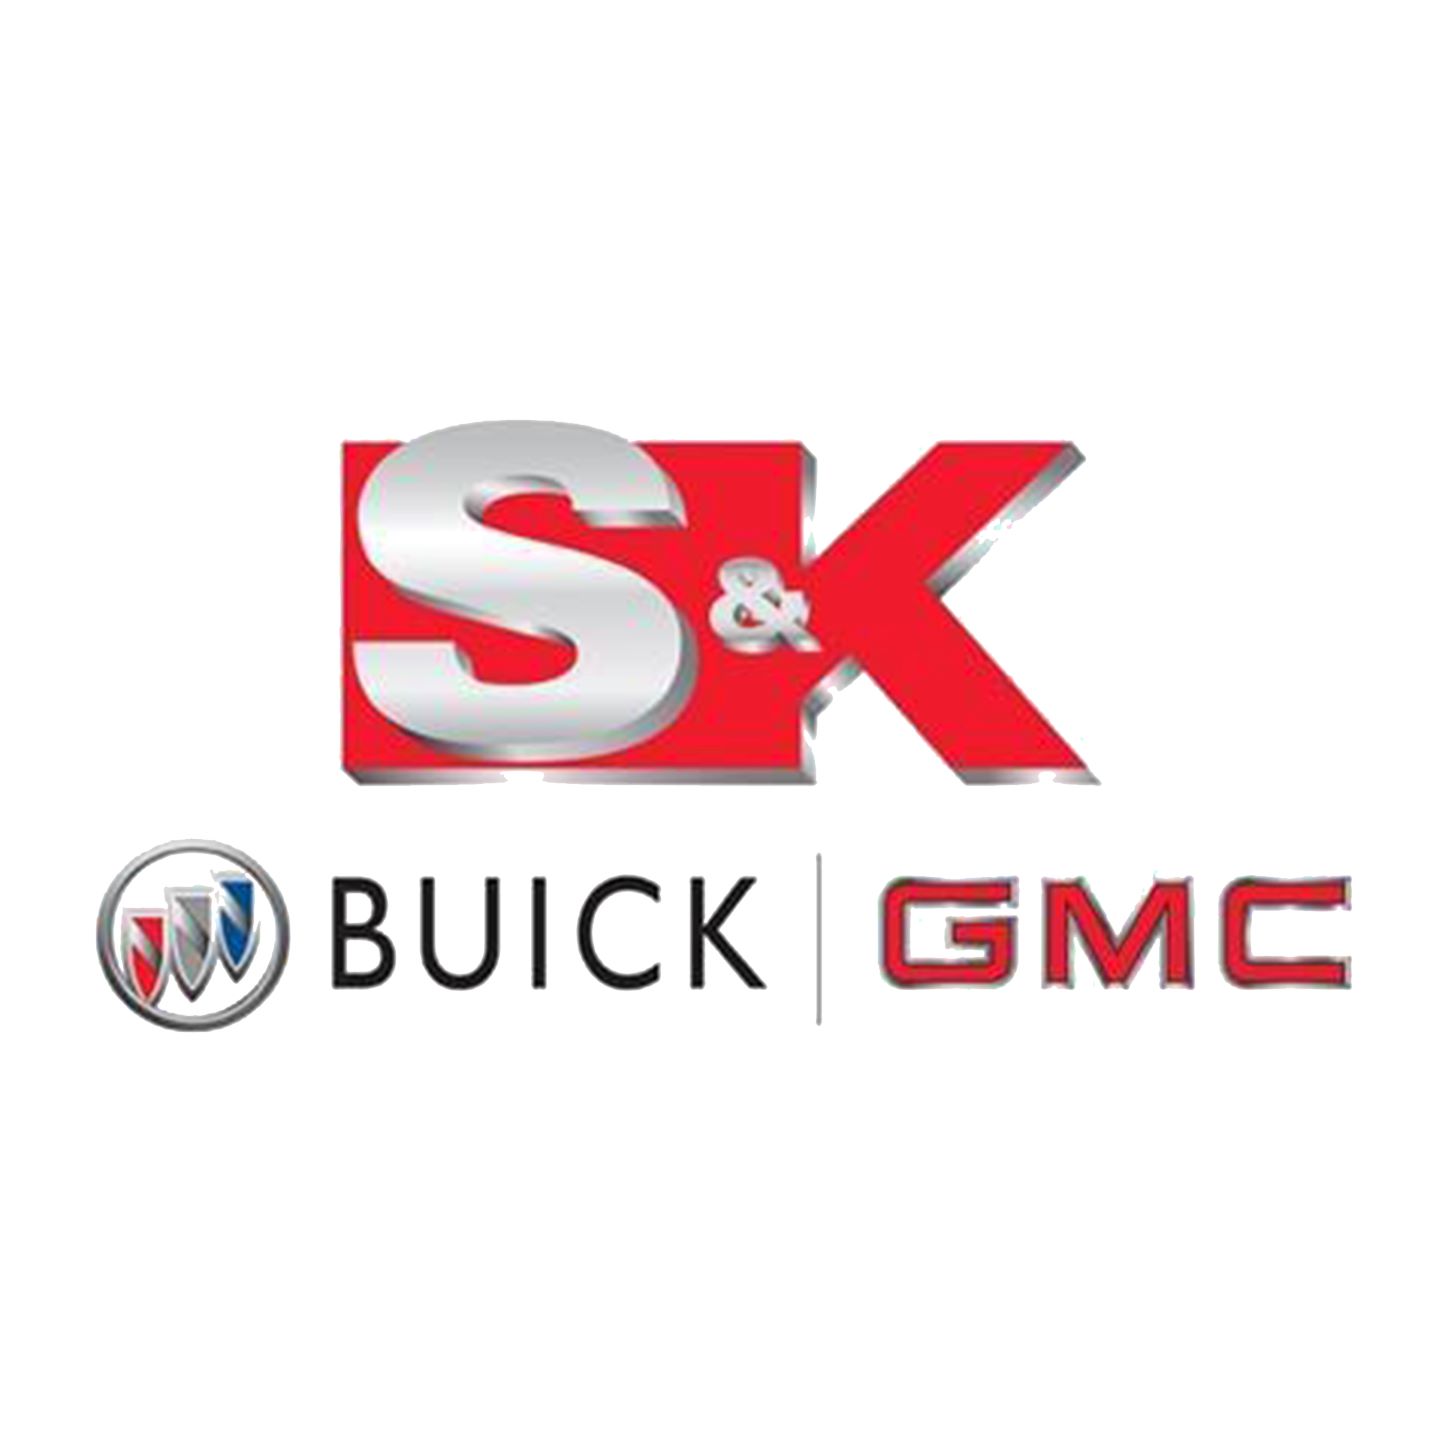 B. S&K Buick (plata)